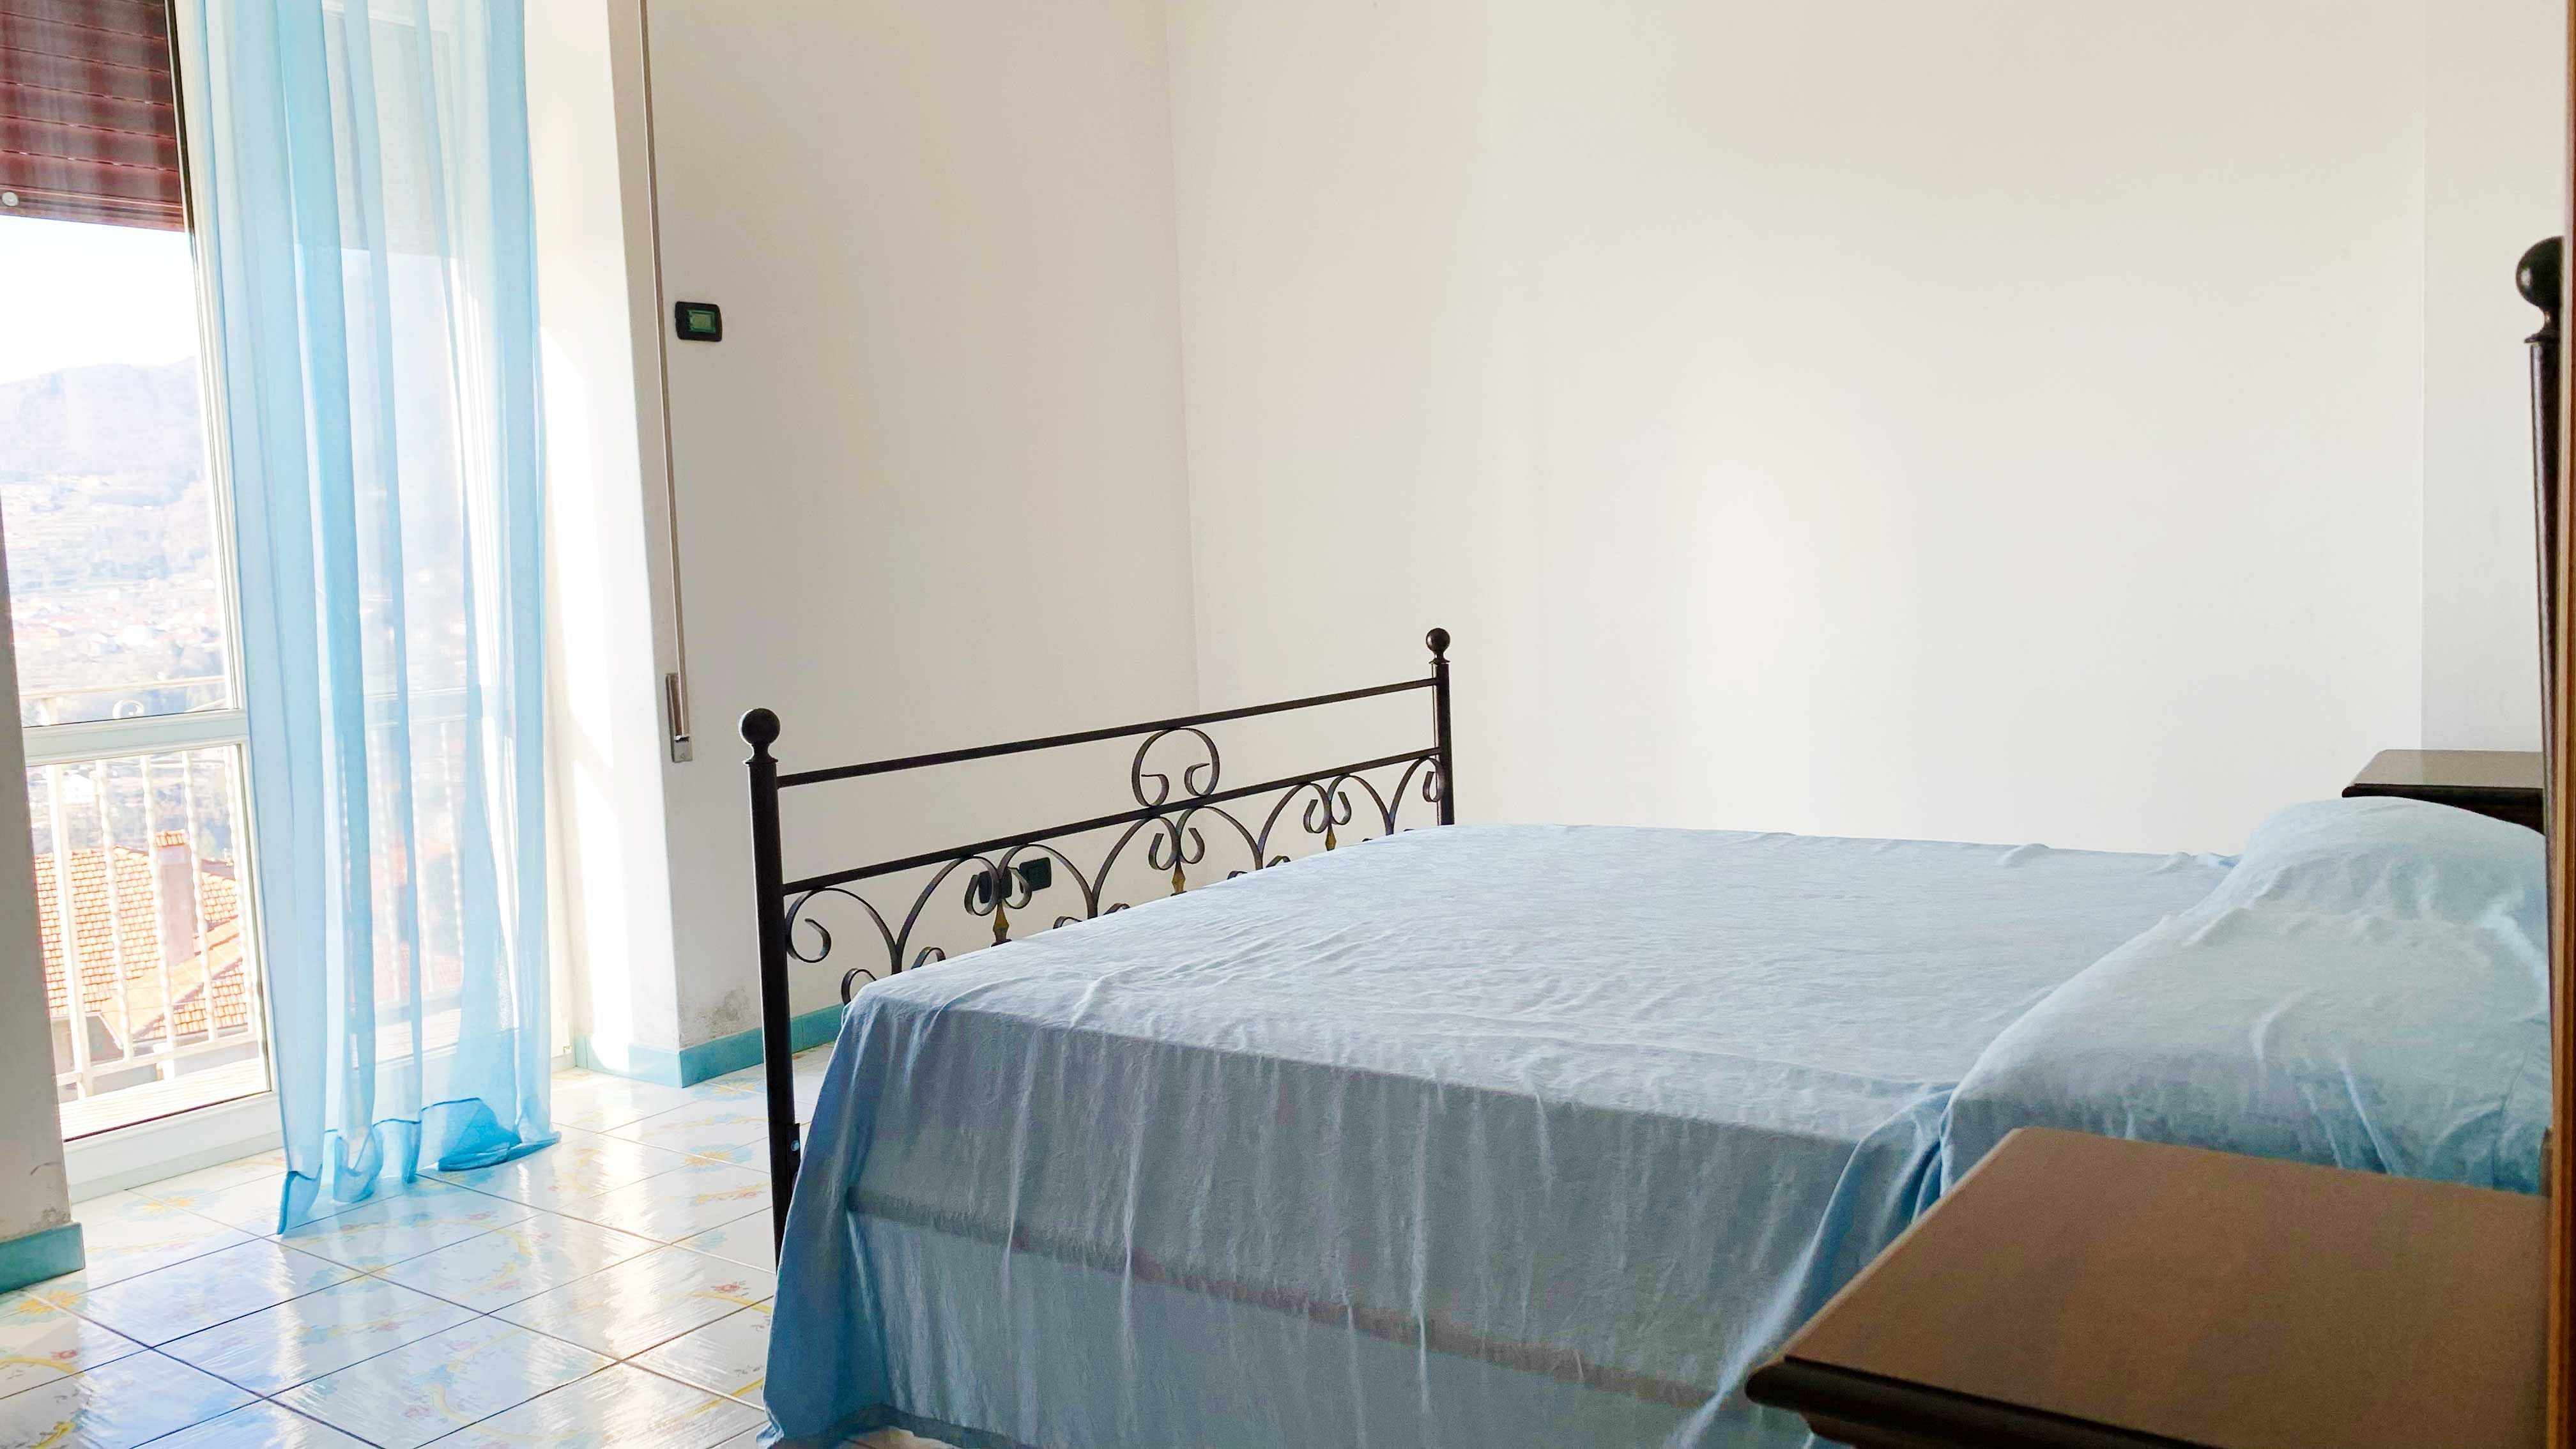 JWguest Apartment at Pianillo, Campania | Residence "Alma" on the Amalfi Coast | Jwbnb no brobnb 13